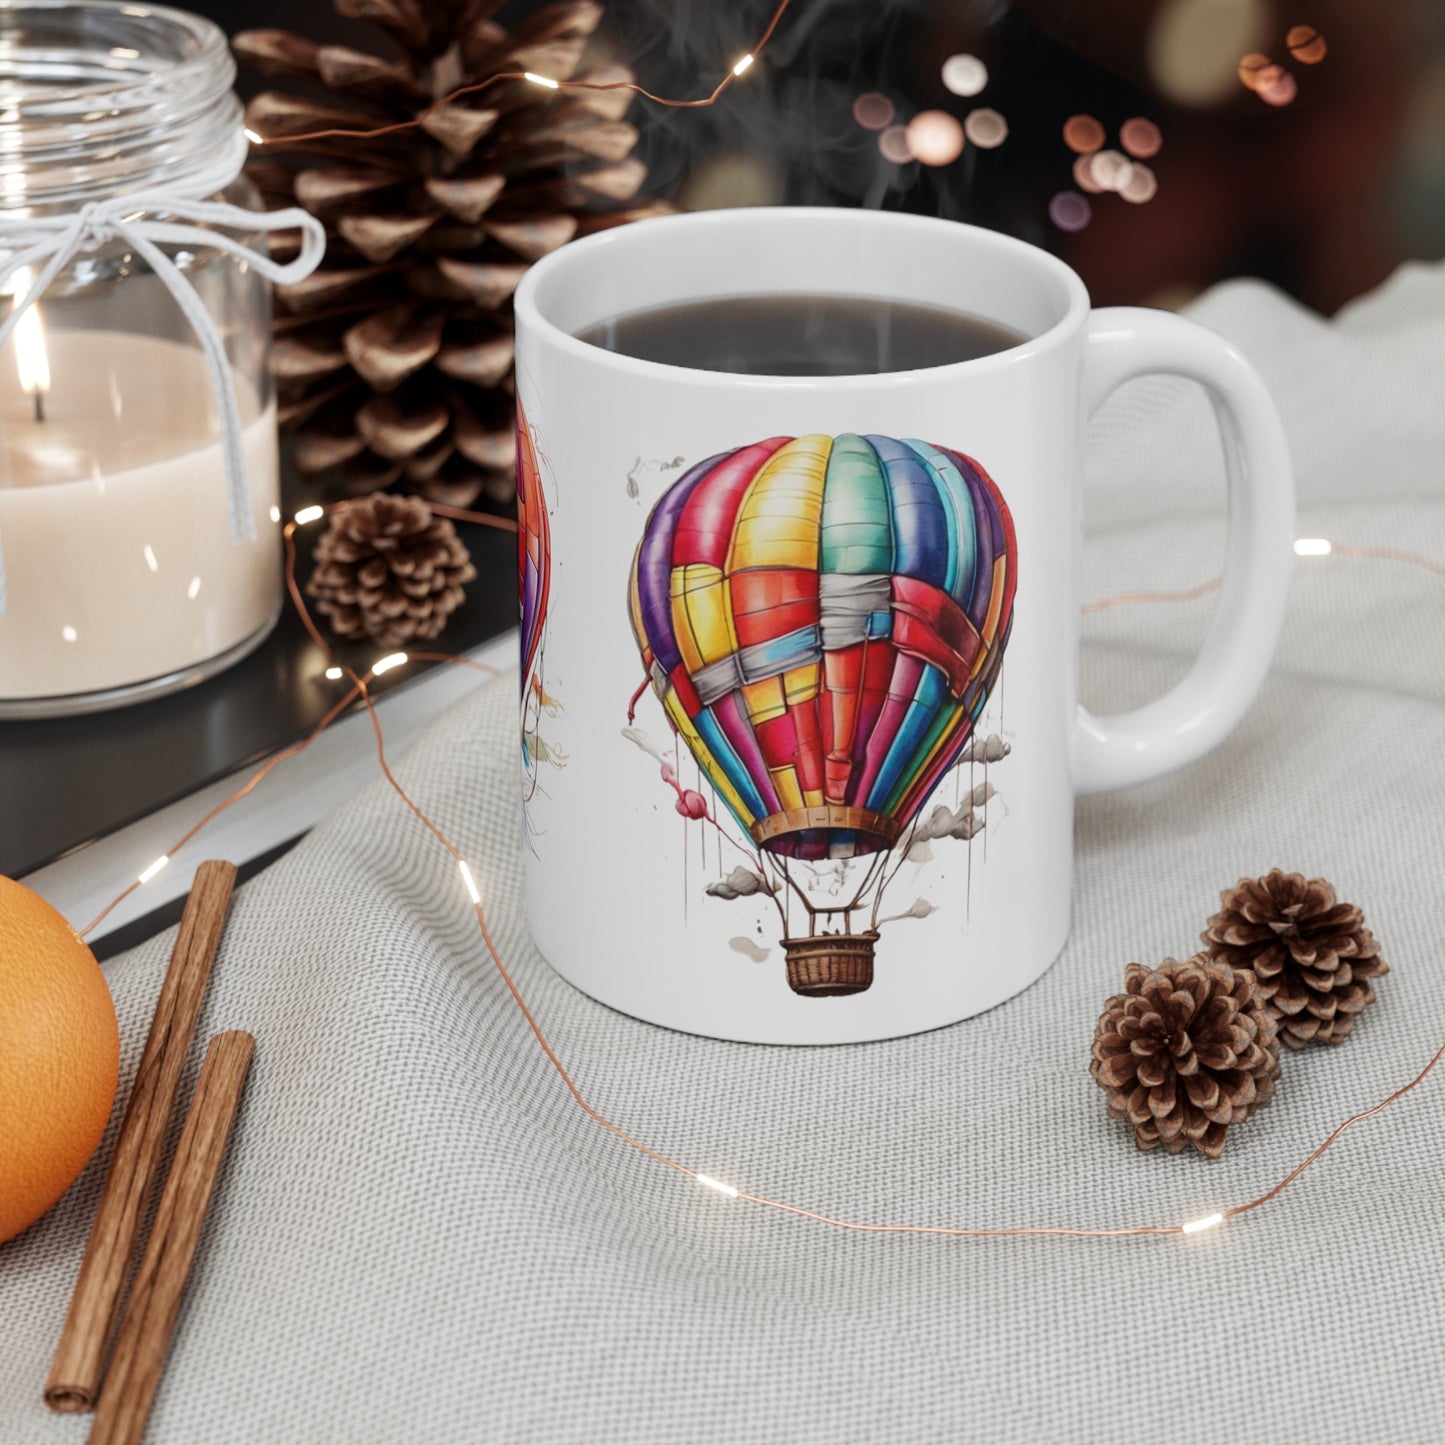 Colourful Hot Air Balloons Mug - Ceramic Coffee Mug 11oz